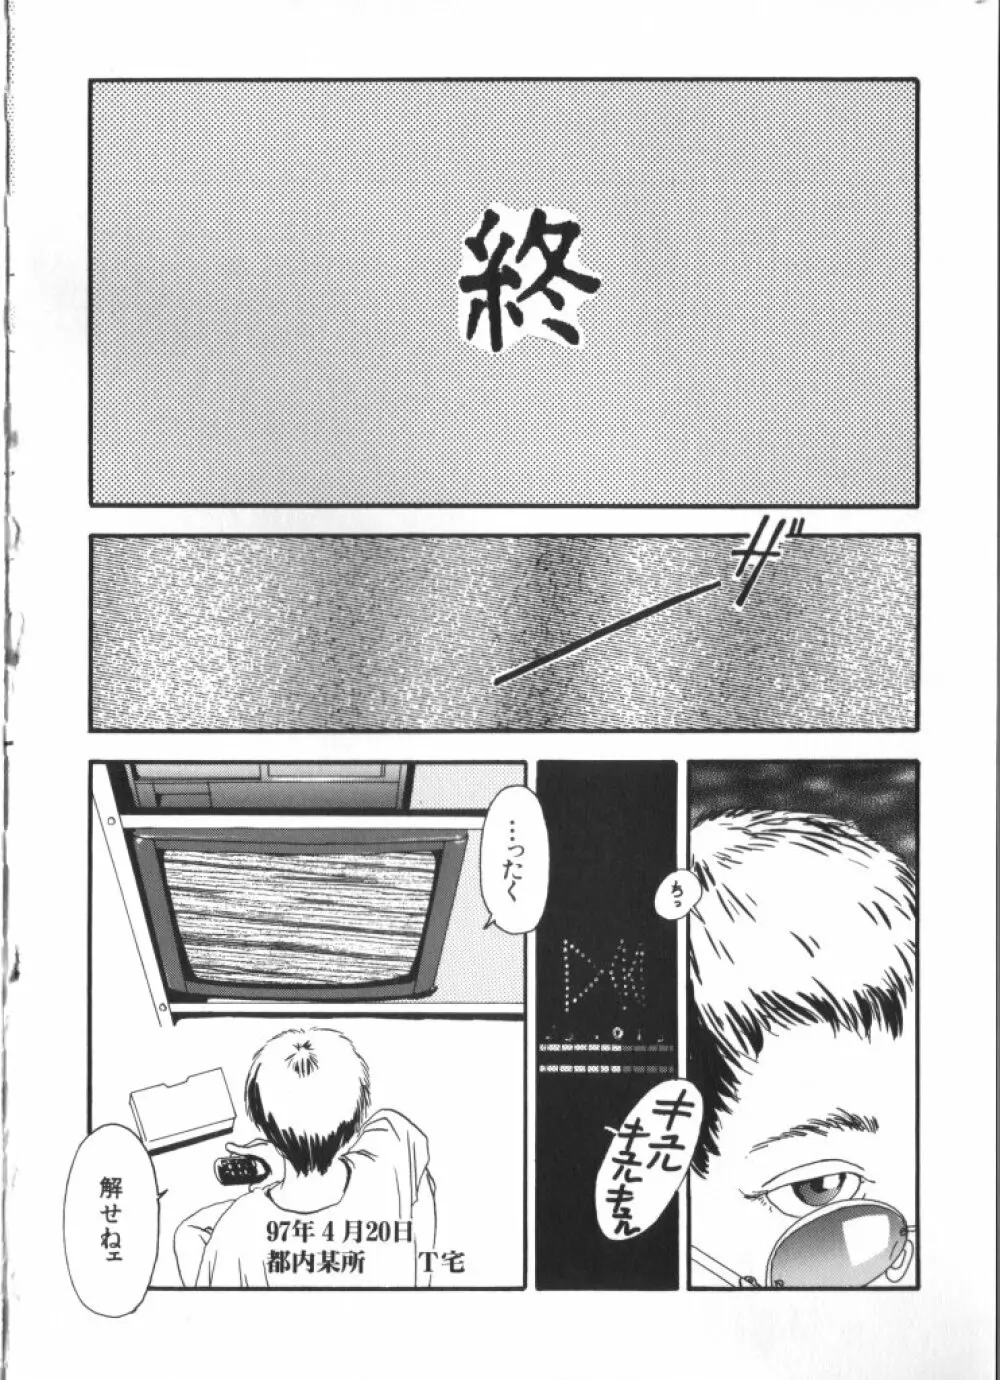 妖精日記 第4号 44ページ